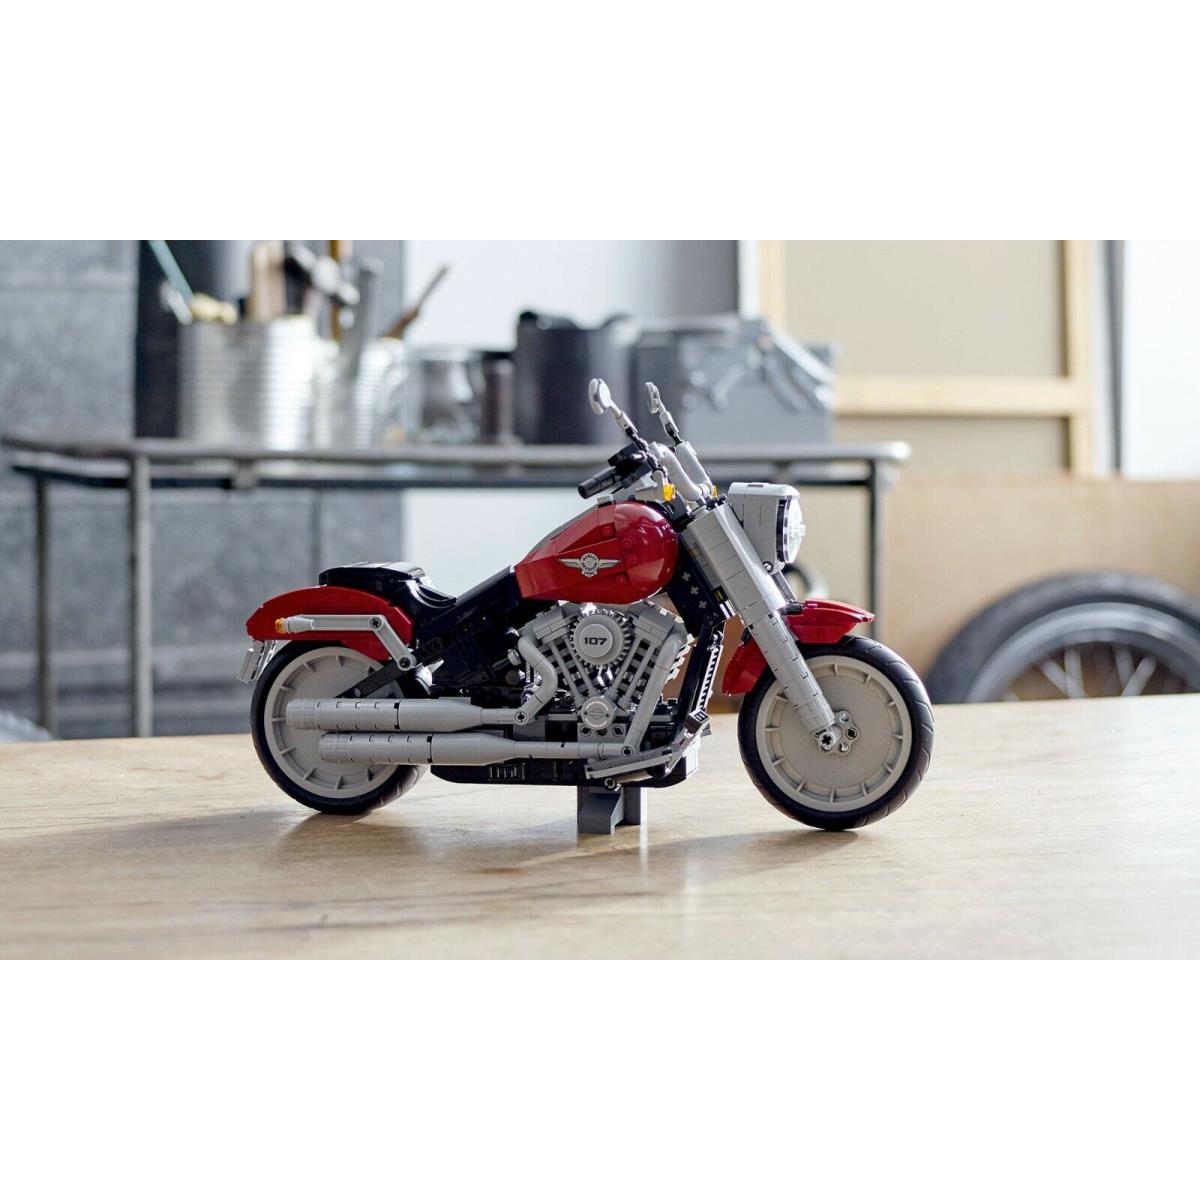 Lego 10269 Expert Creator Harley-davidson Fat Boy Motorcycle